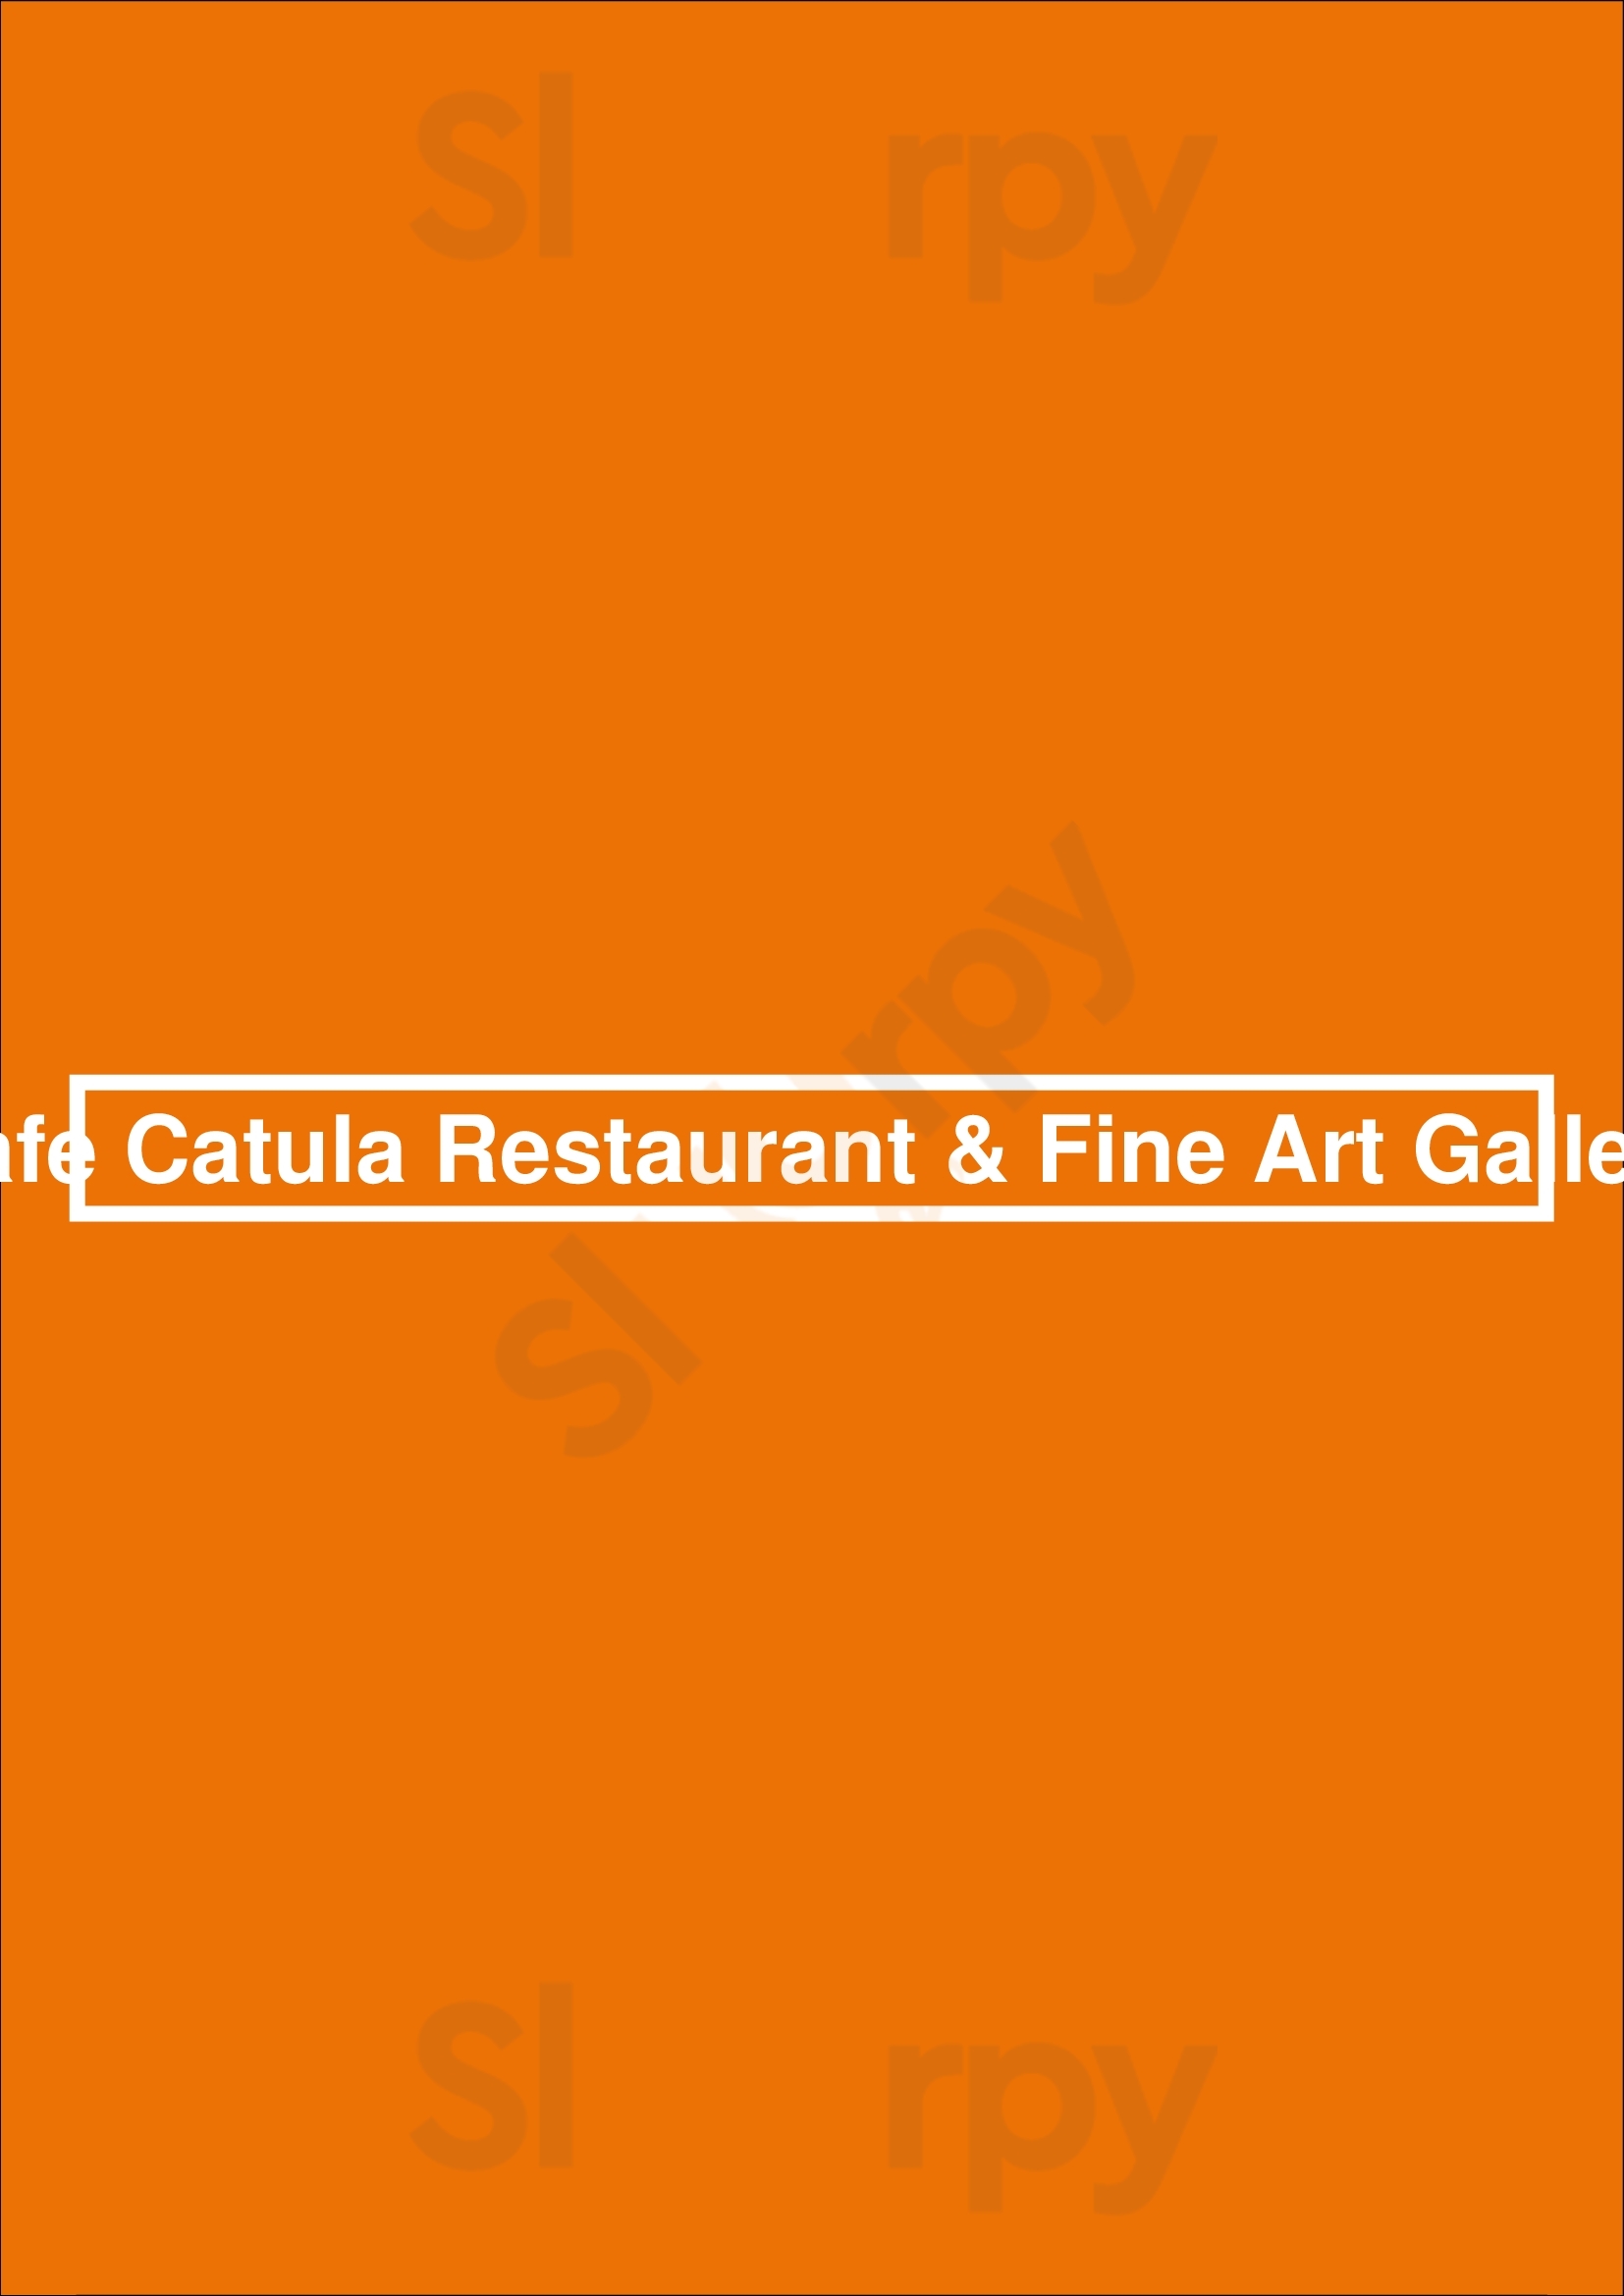 Cafe Catula Restaurant & Fine Art Gallery Miami Menu - 1